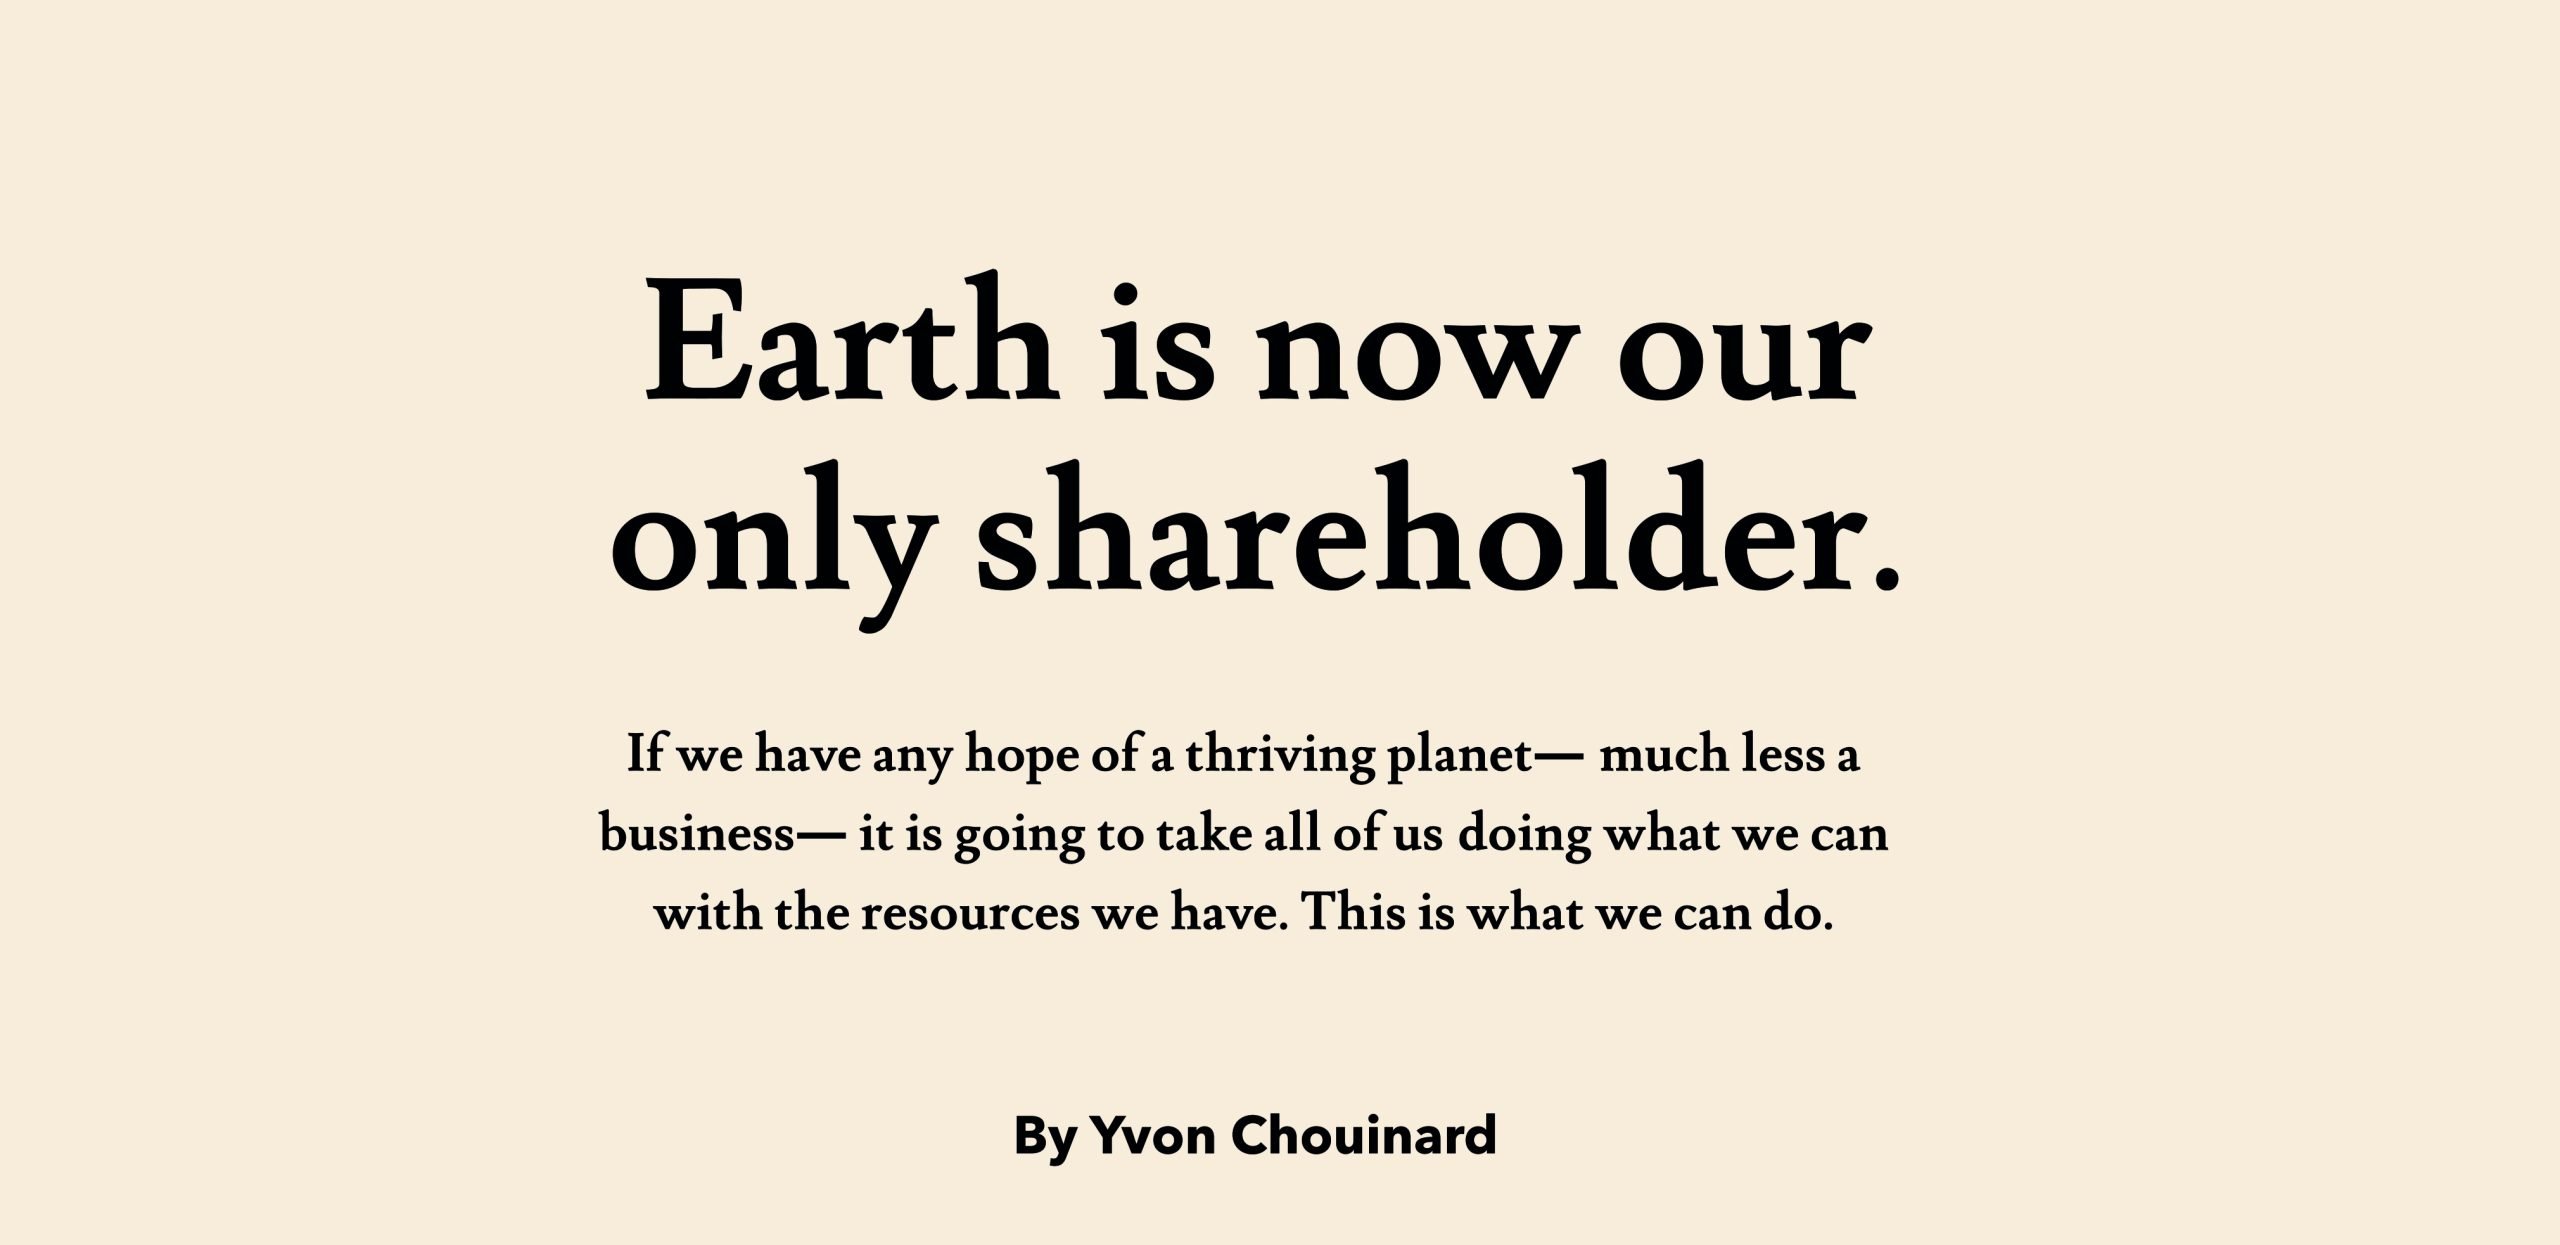 A snapshot of Yvon Chouinard's handover message